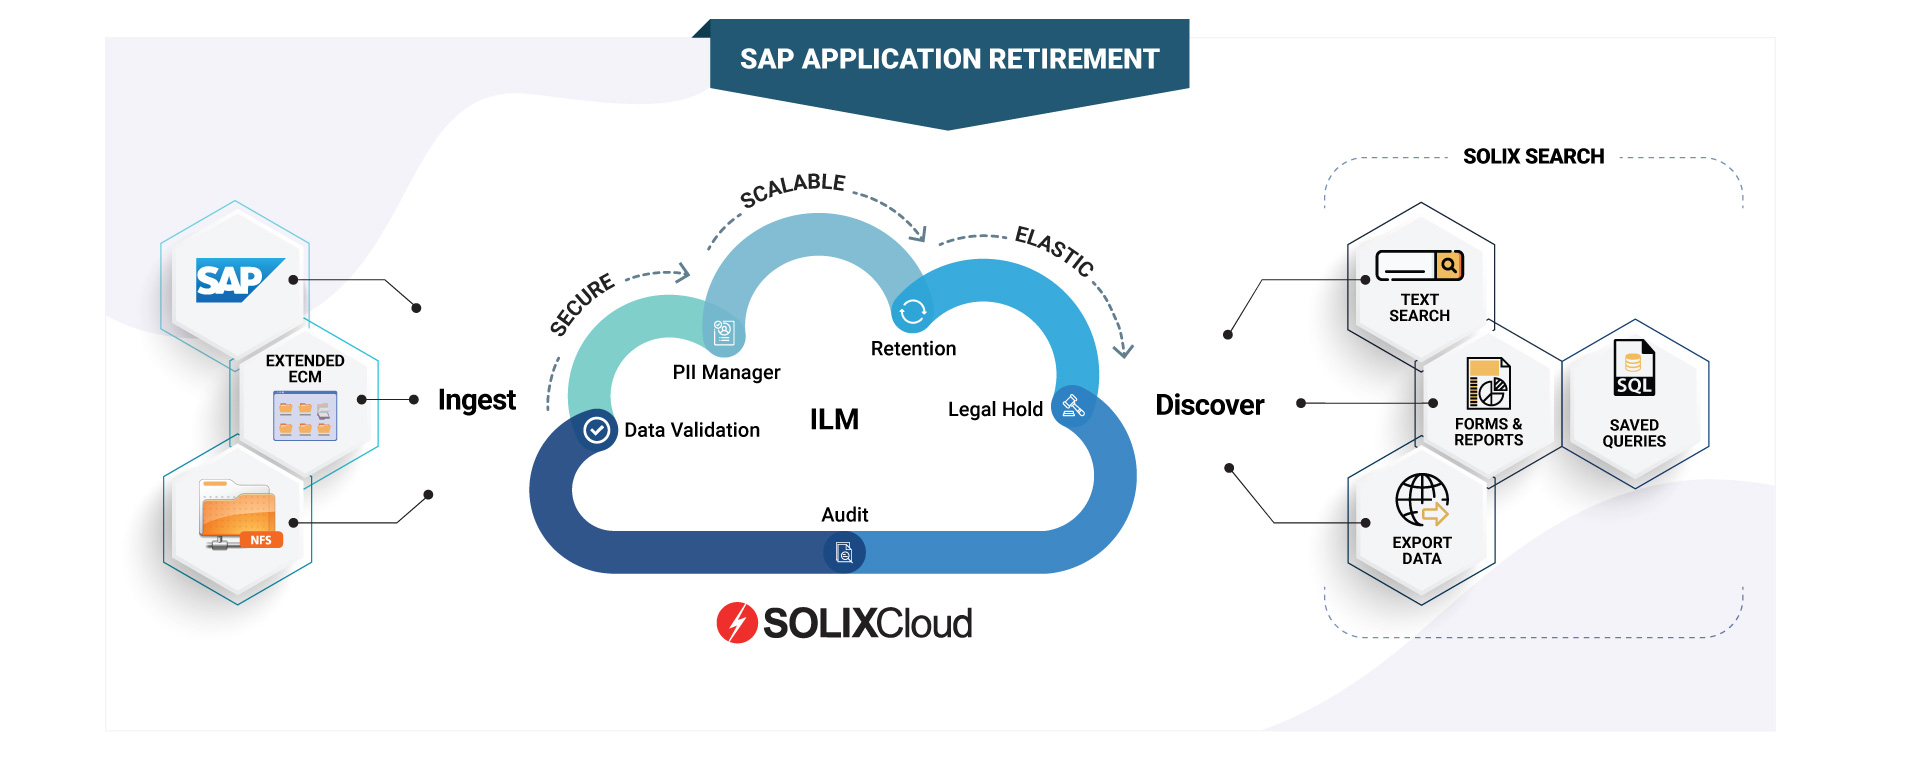 SAP Application Retirement